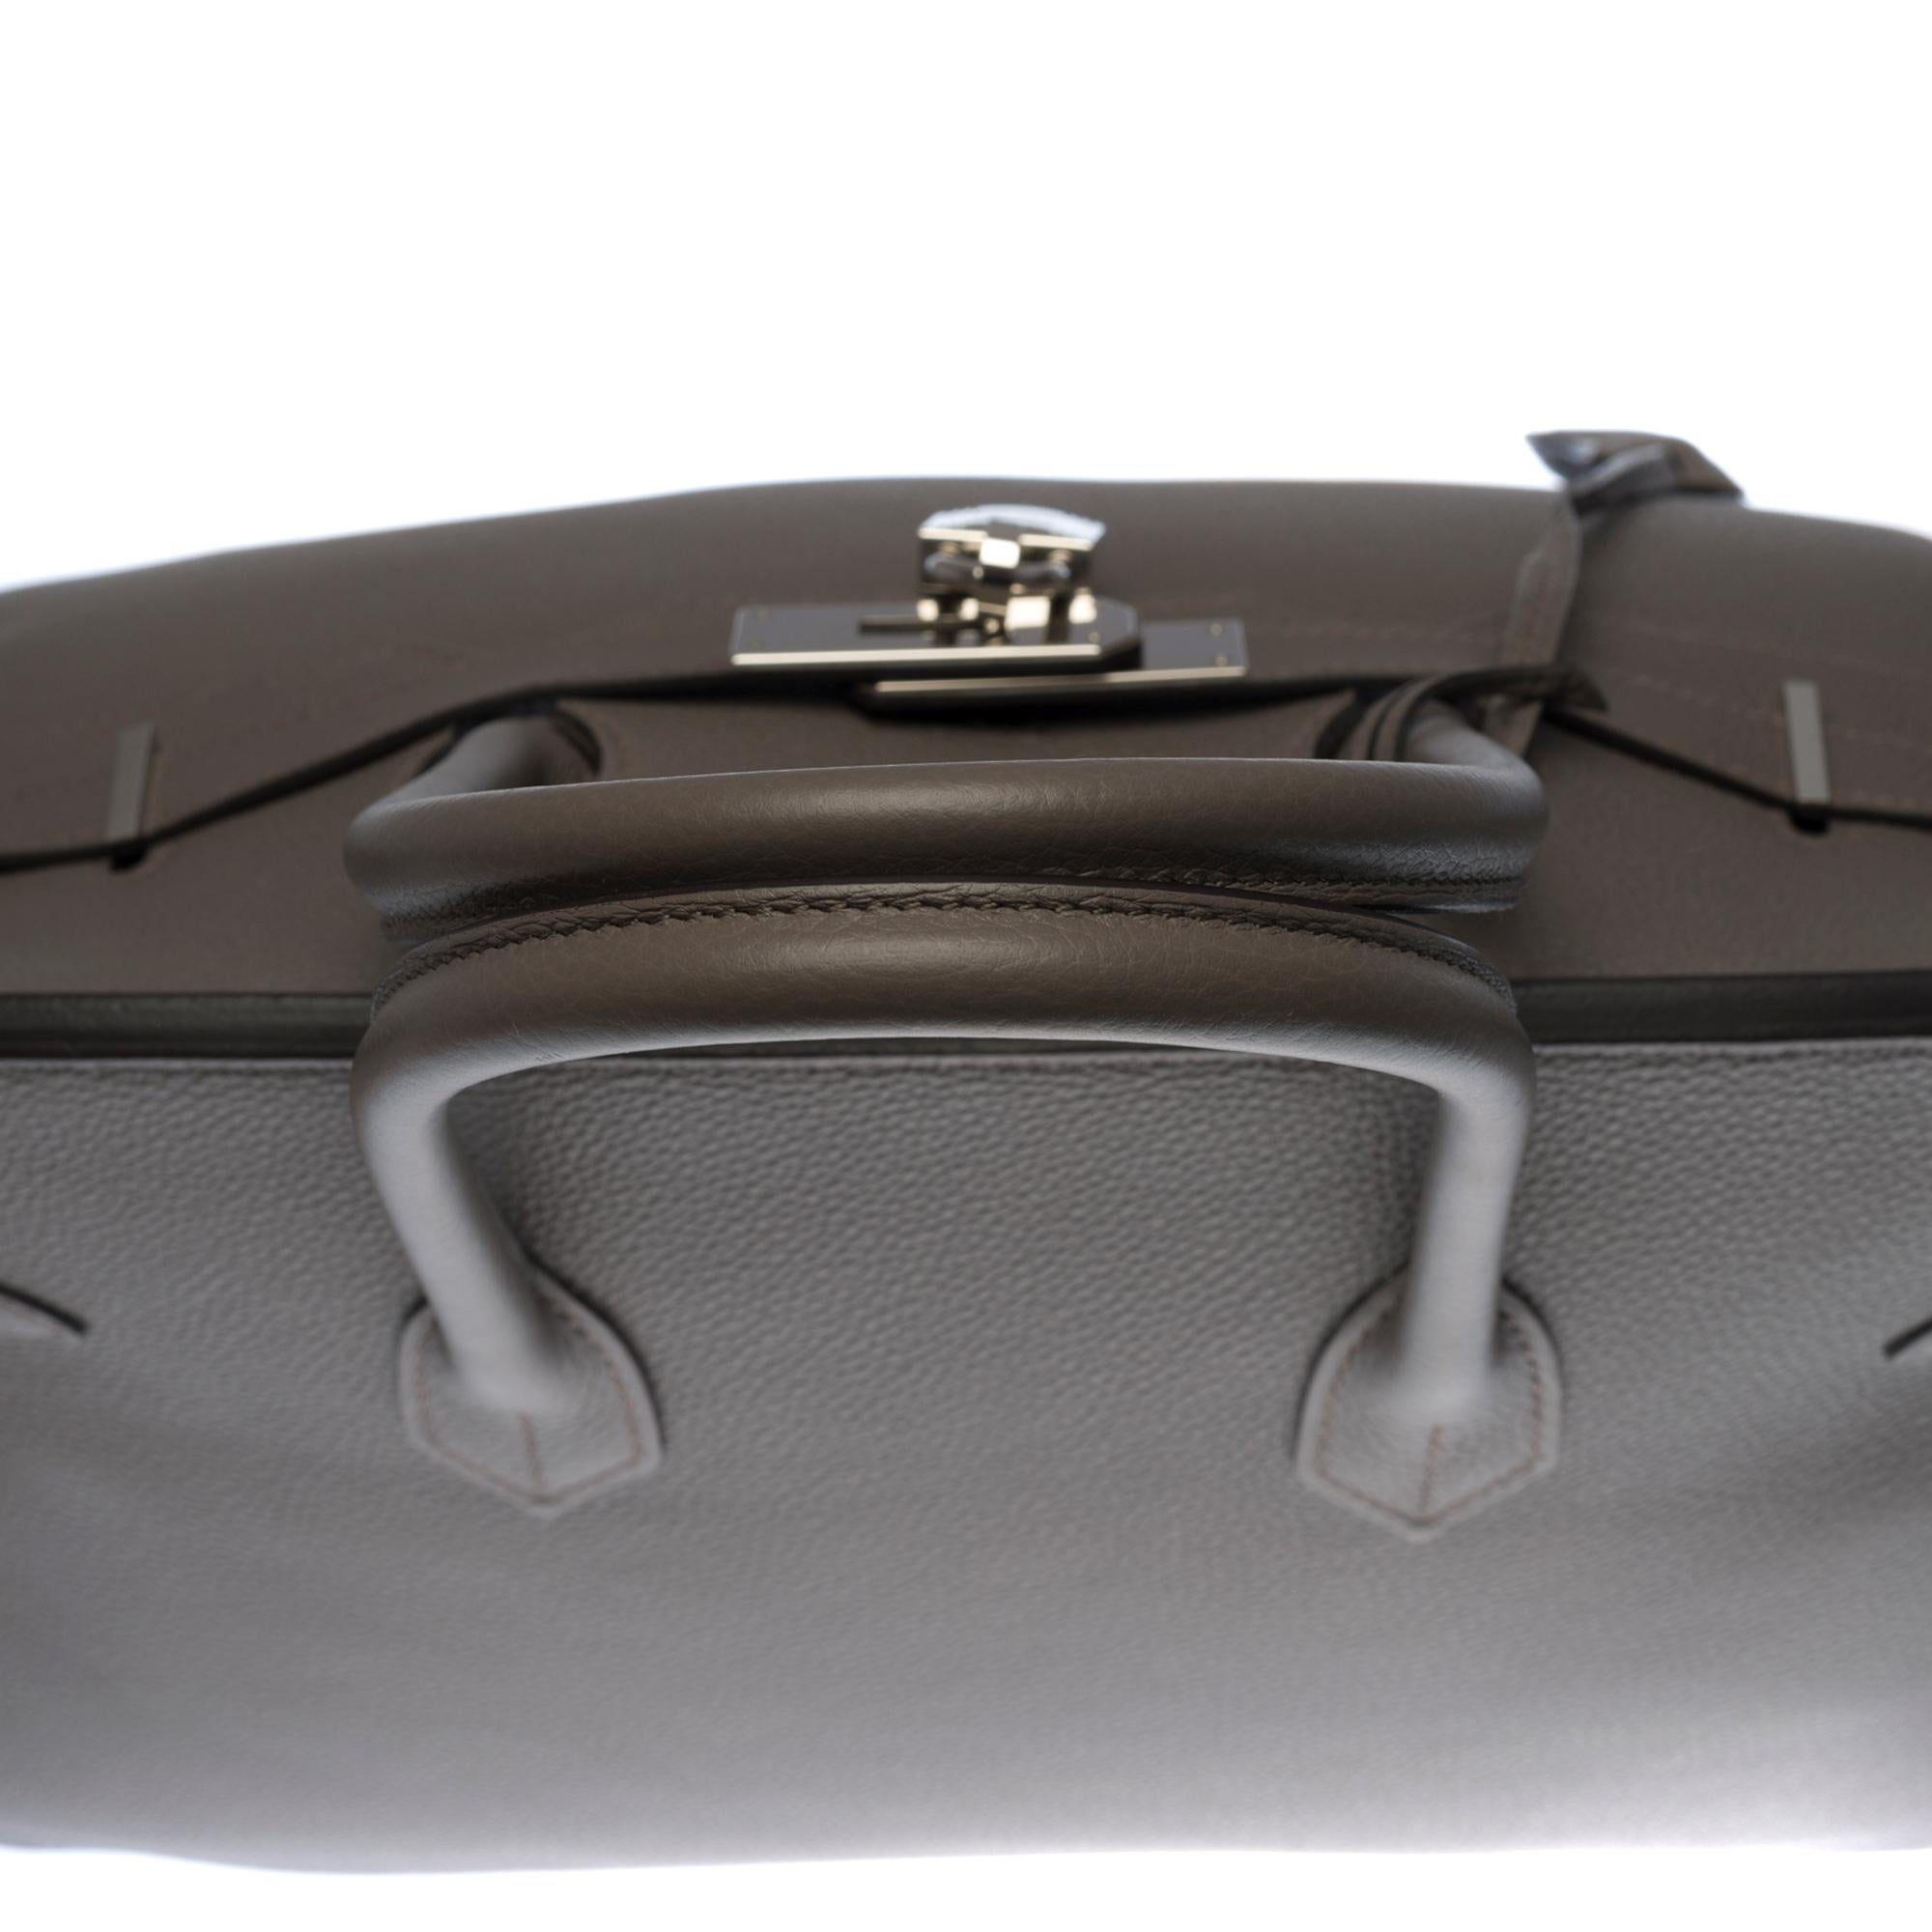 Almost New -Full set-Hermès Birkin 35 handbag in Etain Togo leather, SHW 3